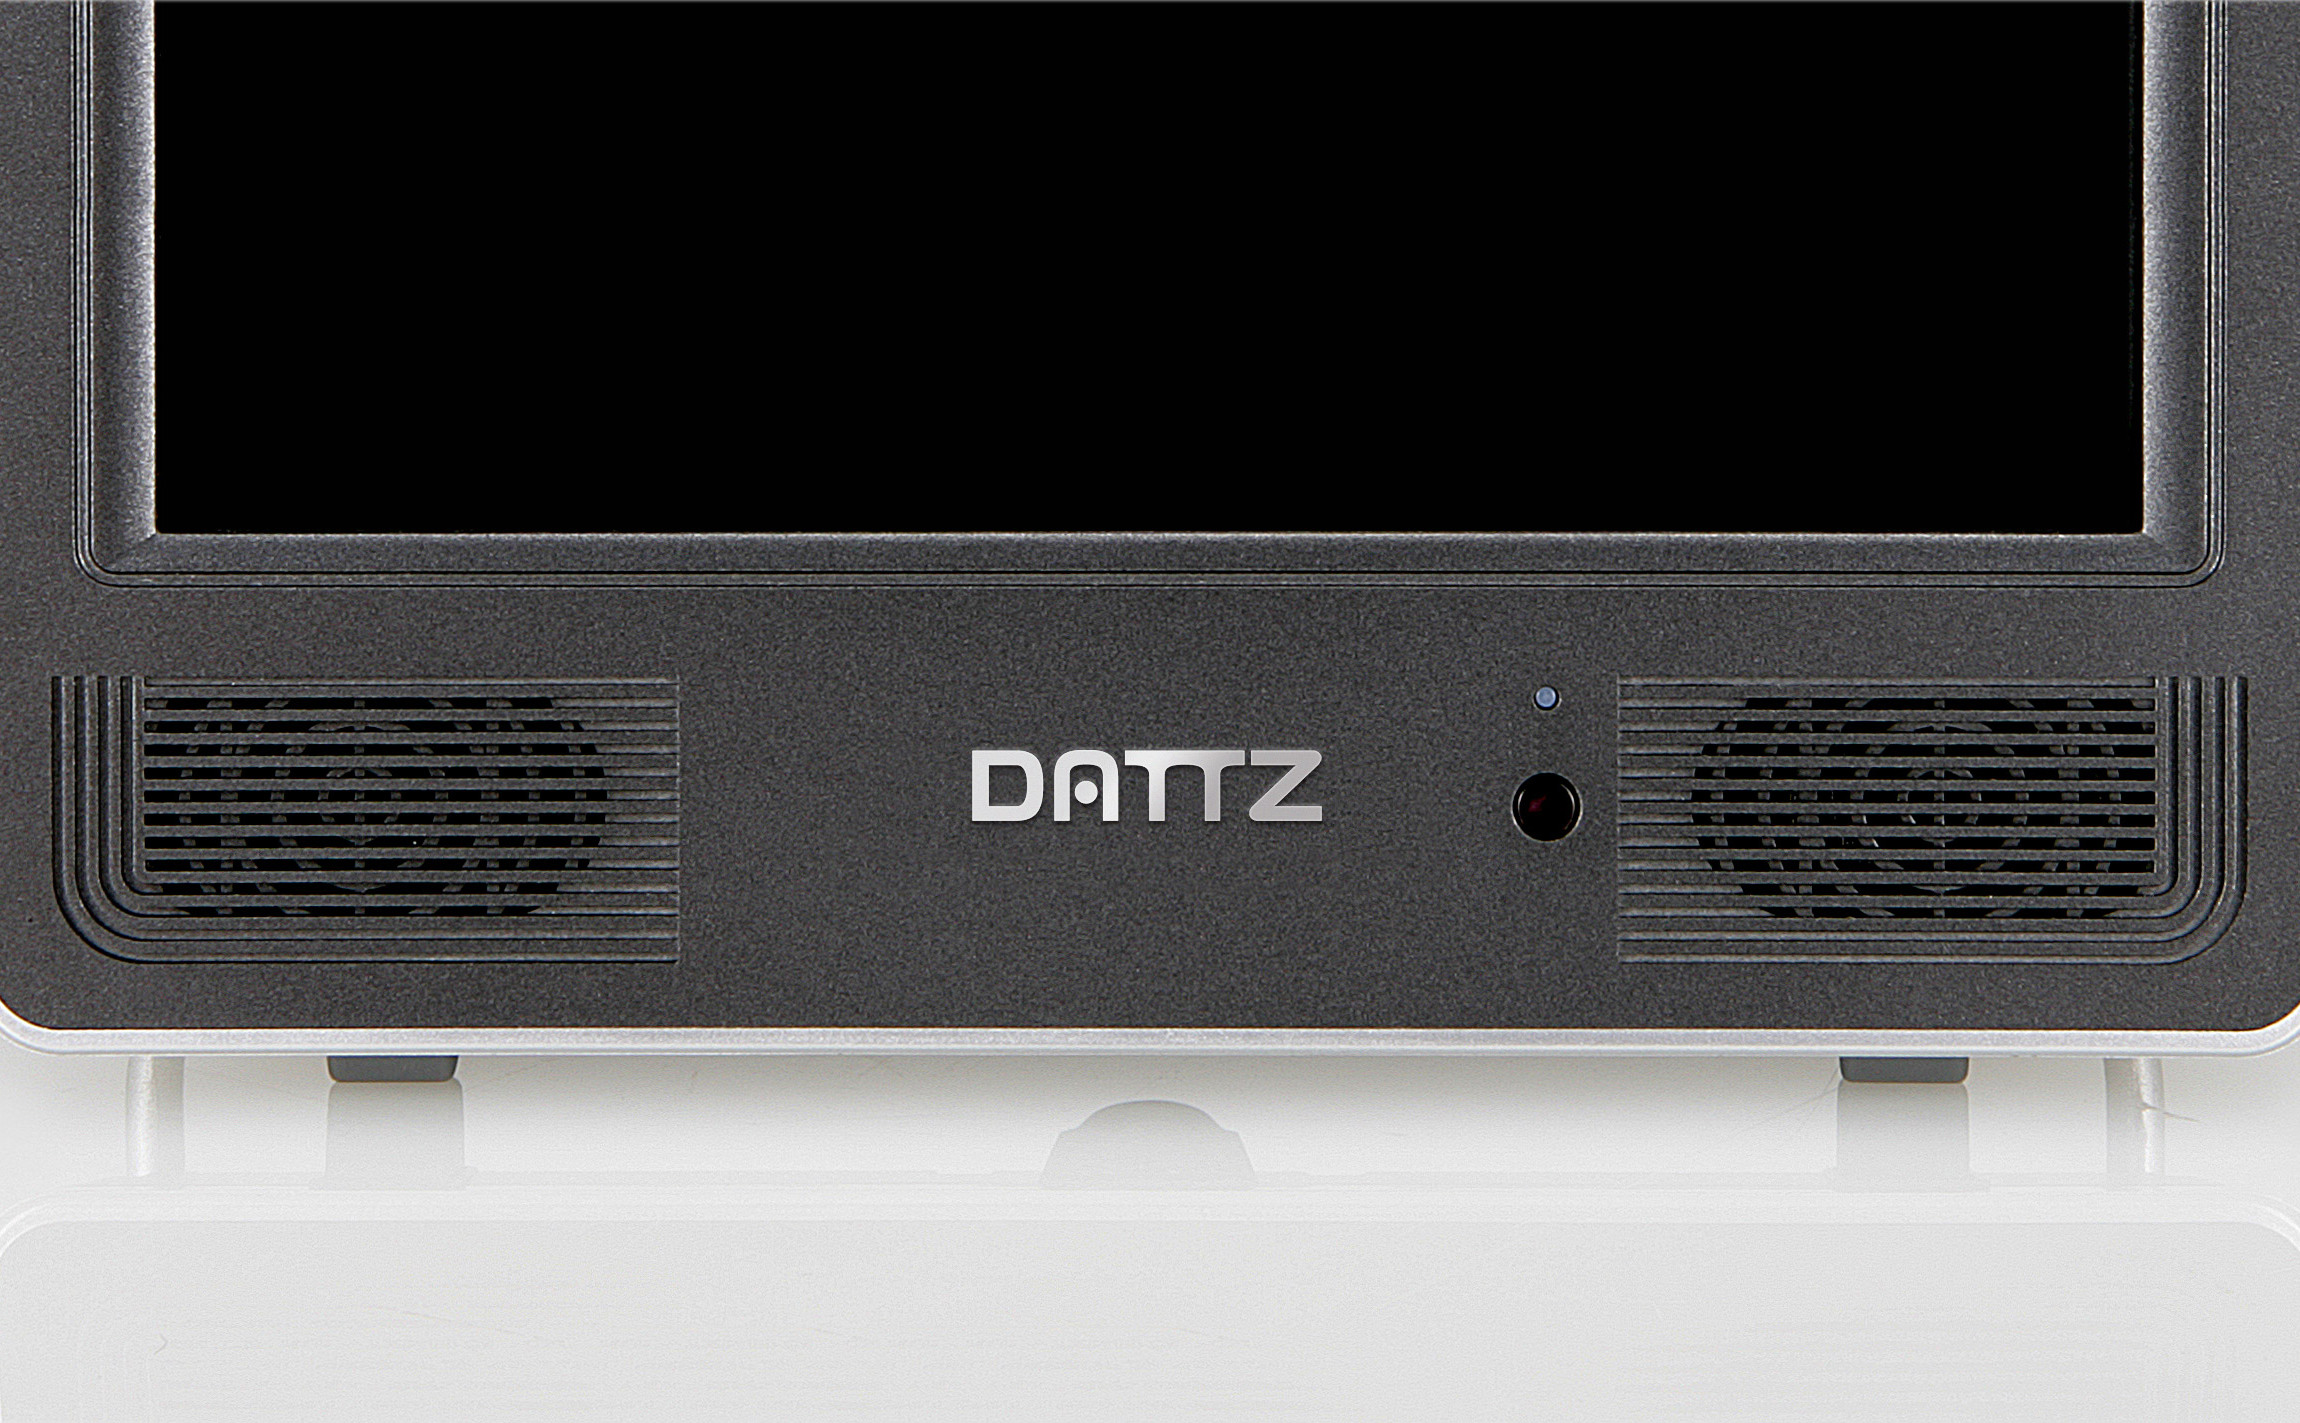 DATTZ DM 테크놀로지 브랜드 & 아이덴터티